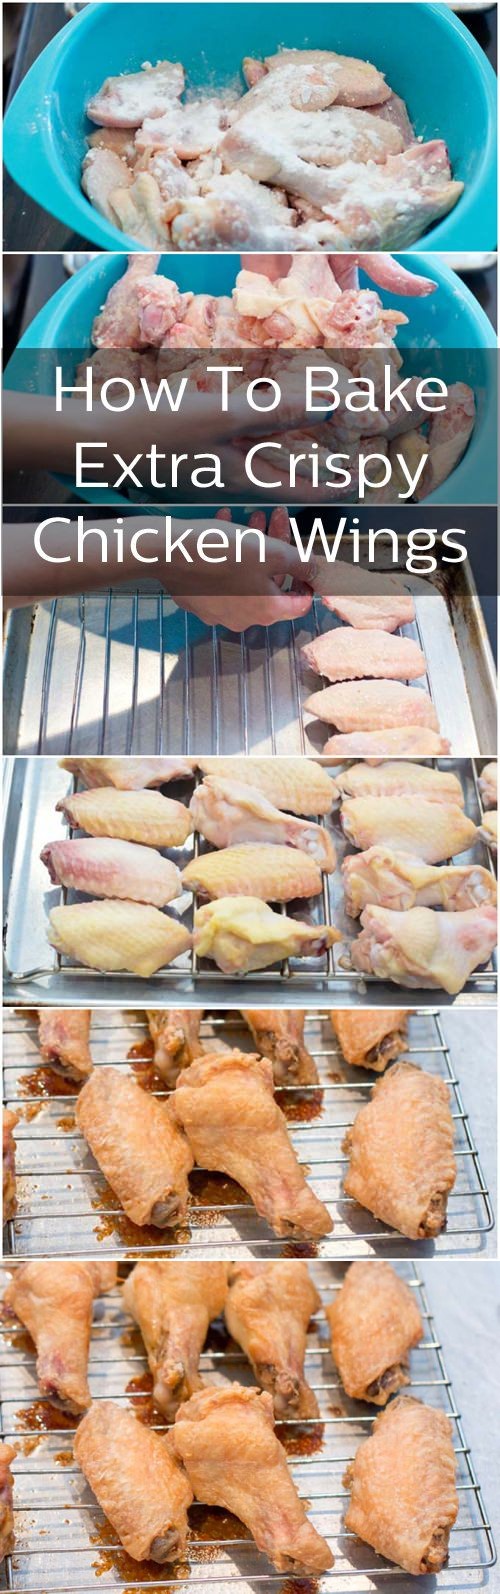 Crispy Oven-Baked Chicken Wings